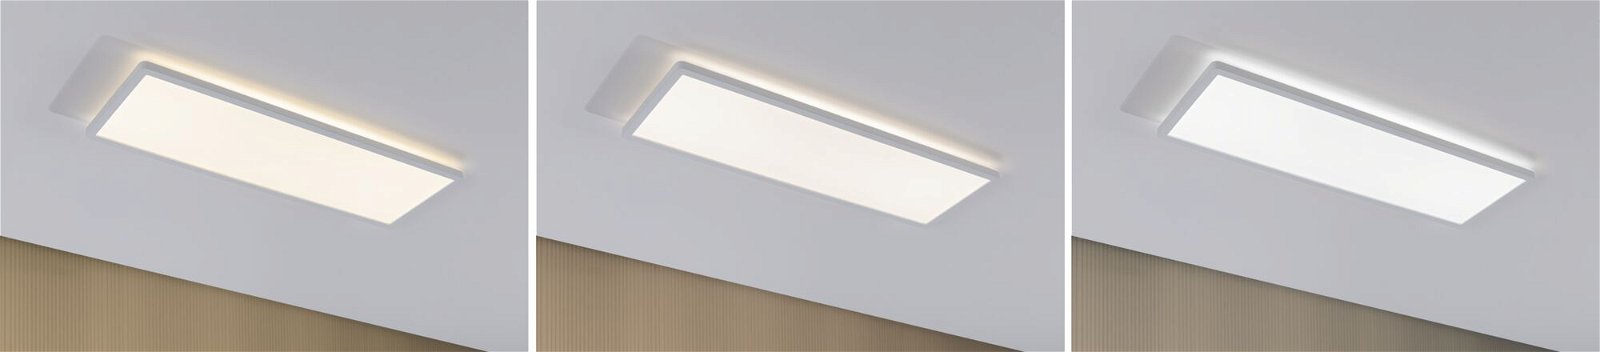 LED Panel Atria Shine Backlight square 580x200mm 22W 1800lm White Switch White